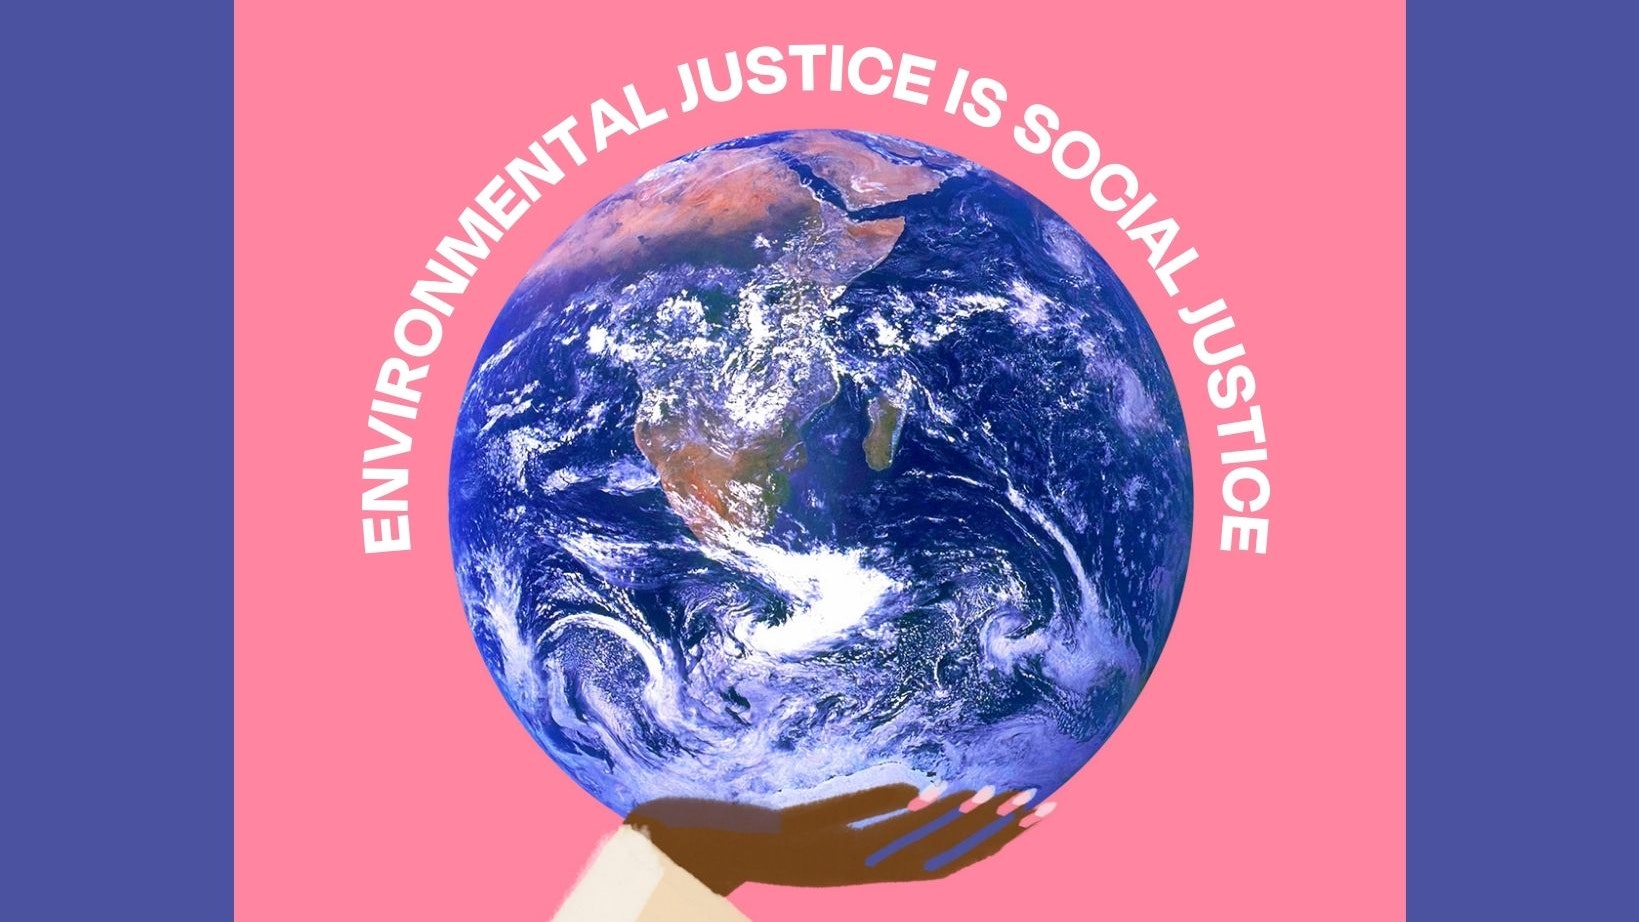 Environmental justice is social justice